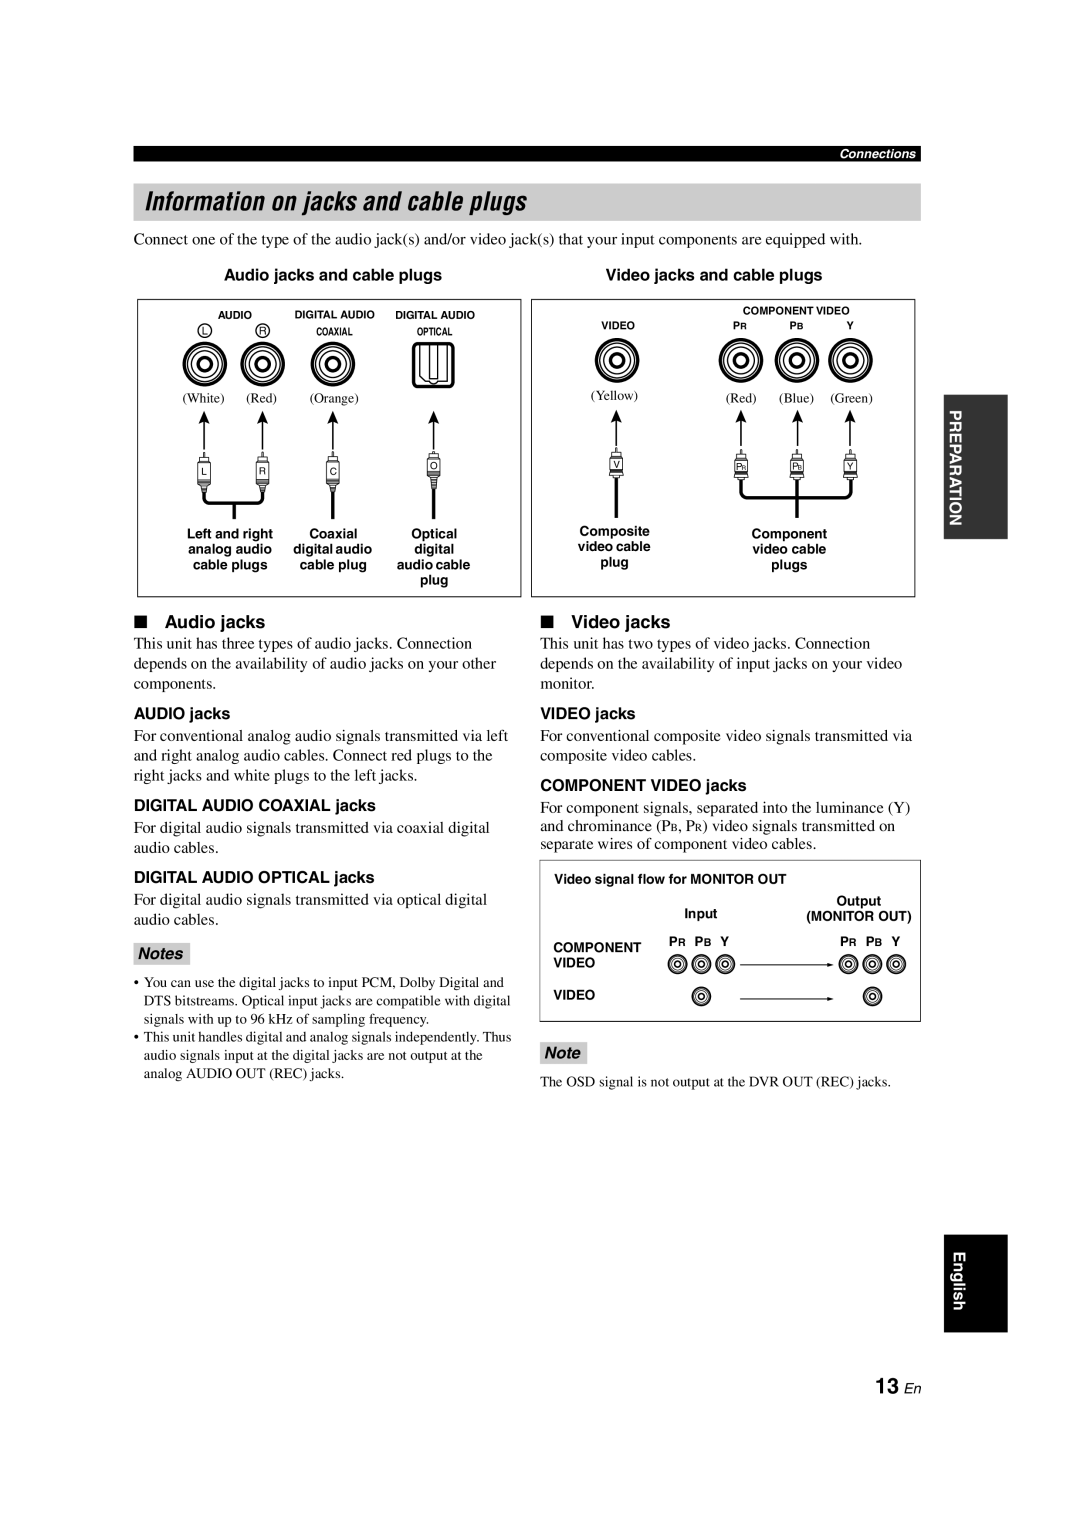 Yamaha DSP-AX463 Information on jacks and cable plugs, 13 En, Video jacks, Audio jacks and cable plugs, AUDIO jacks 